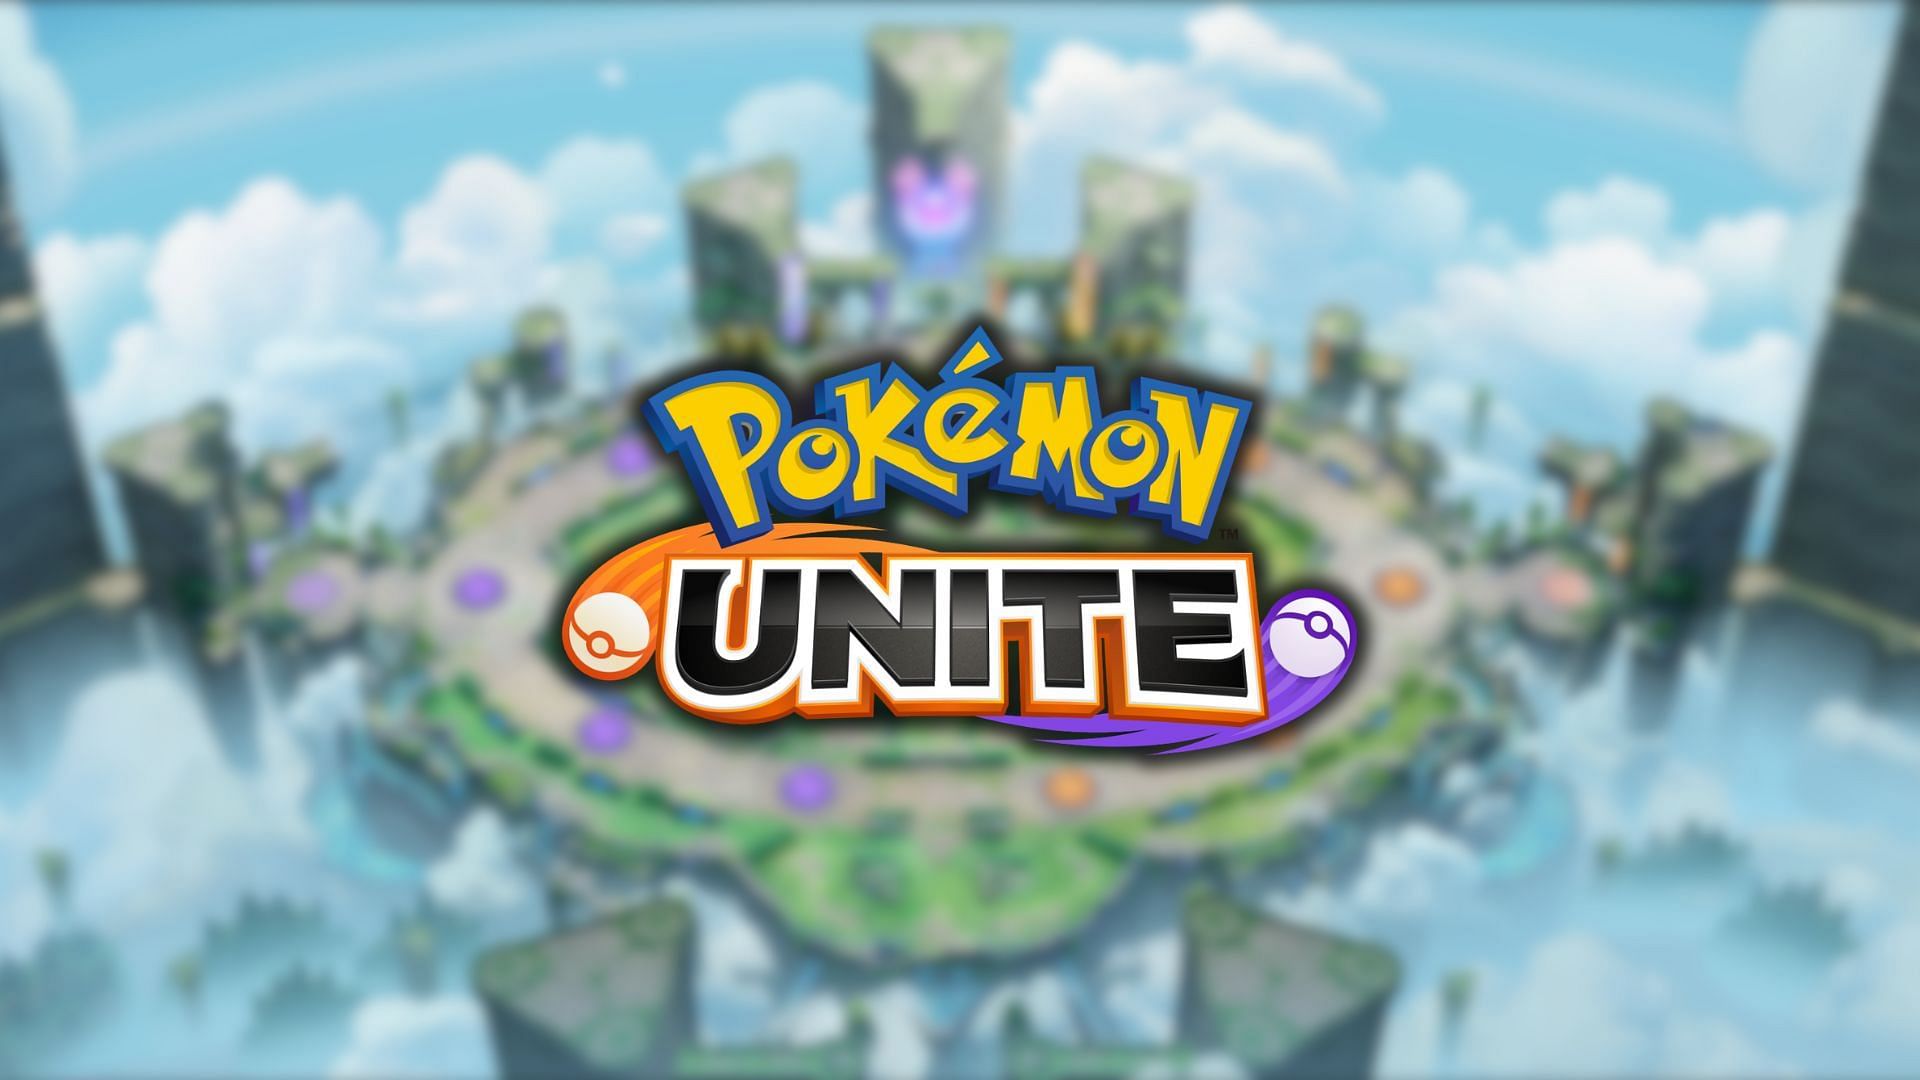 Pokemon Unite v1.14.1.2 patch notes: Shiny Rayquaza, Draft Pick, Miraidon, and other buffs and nerfs